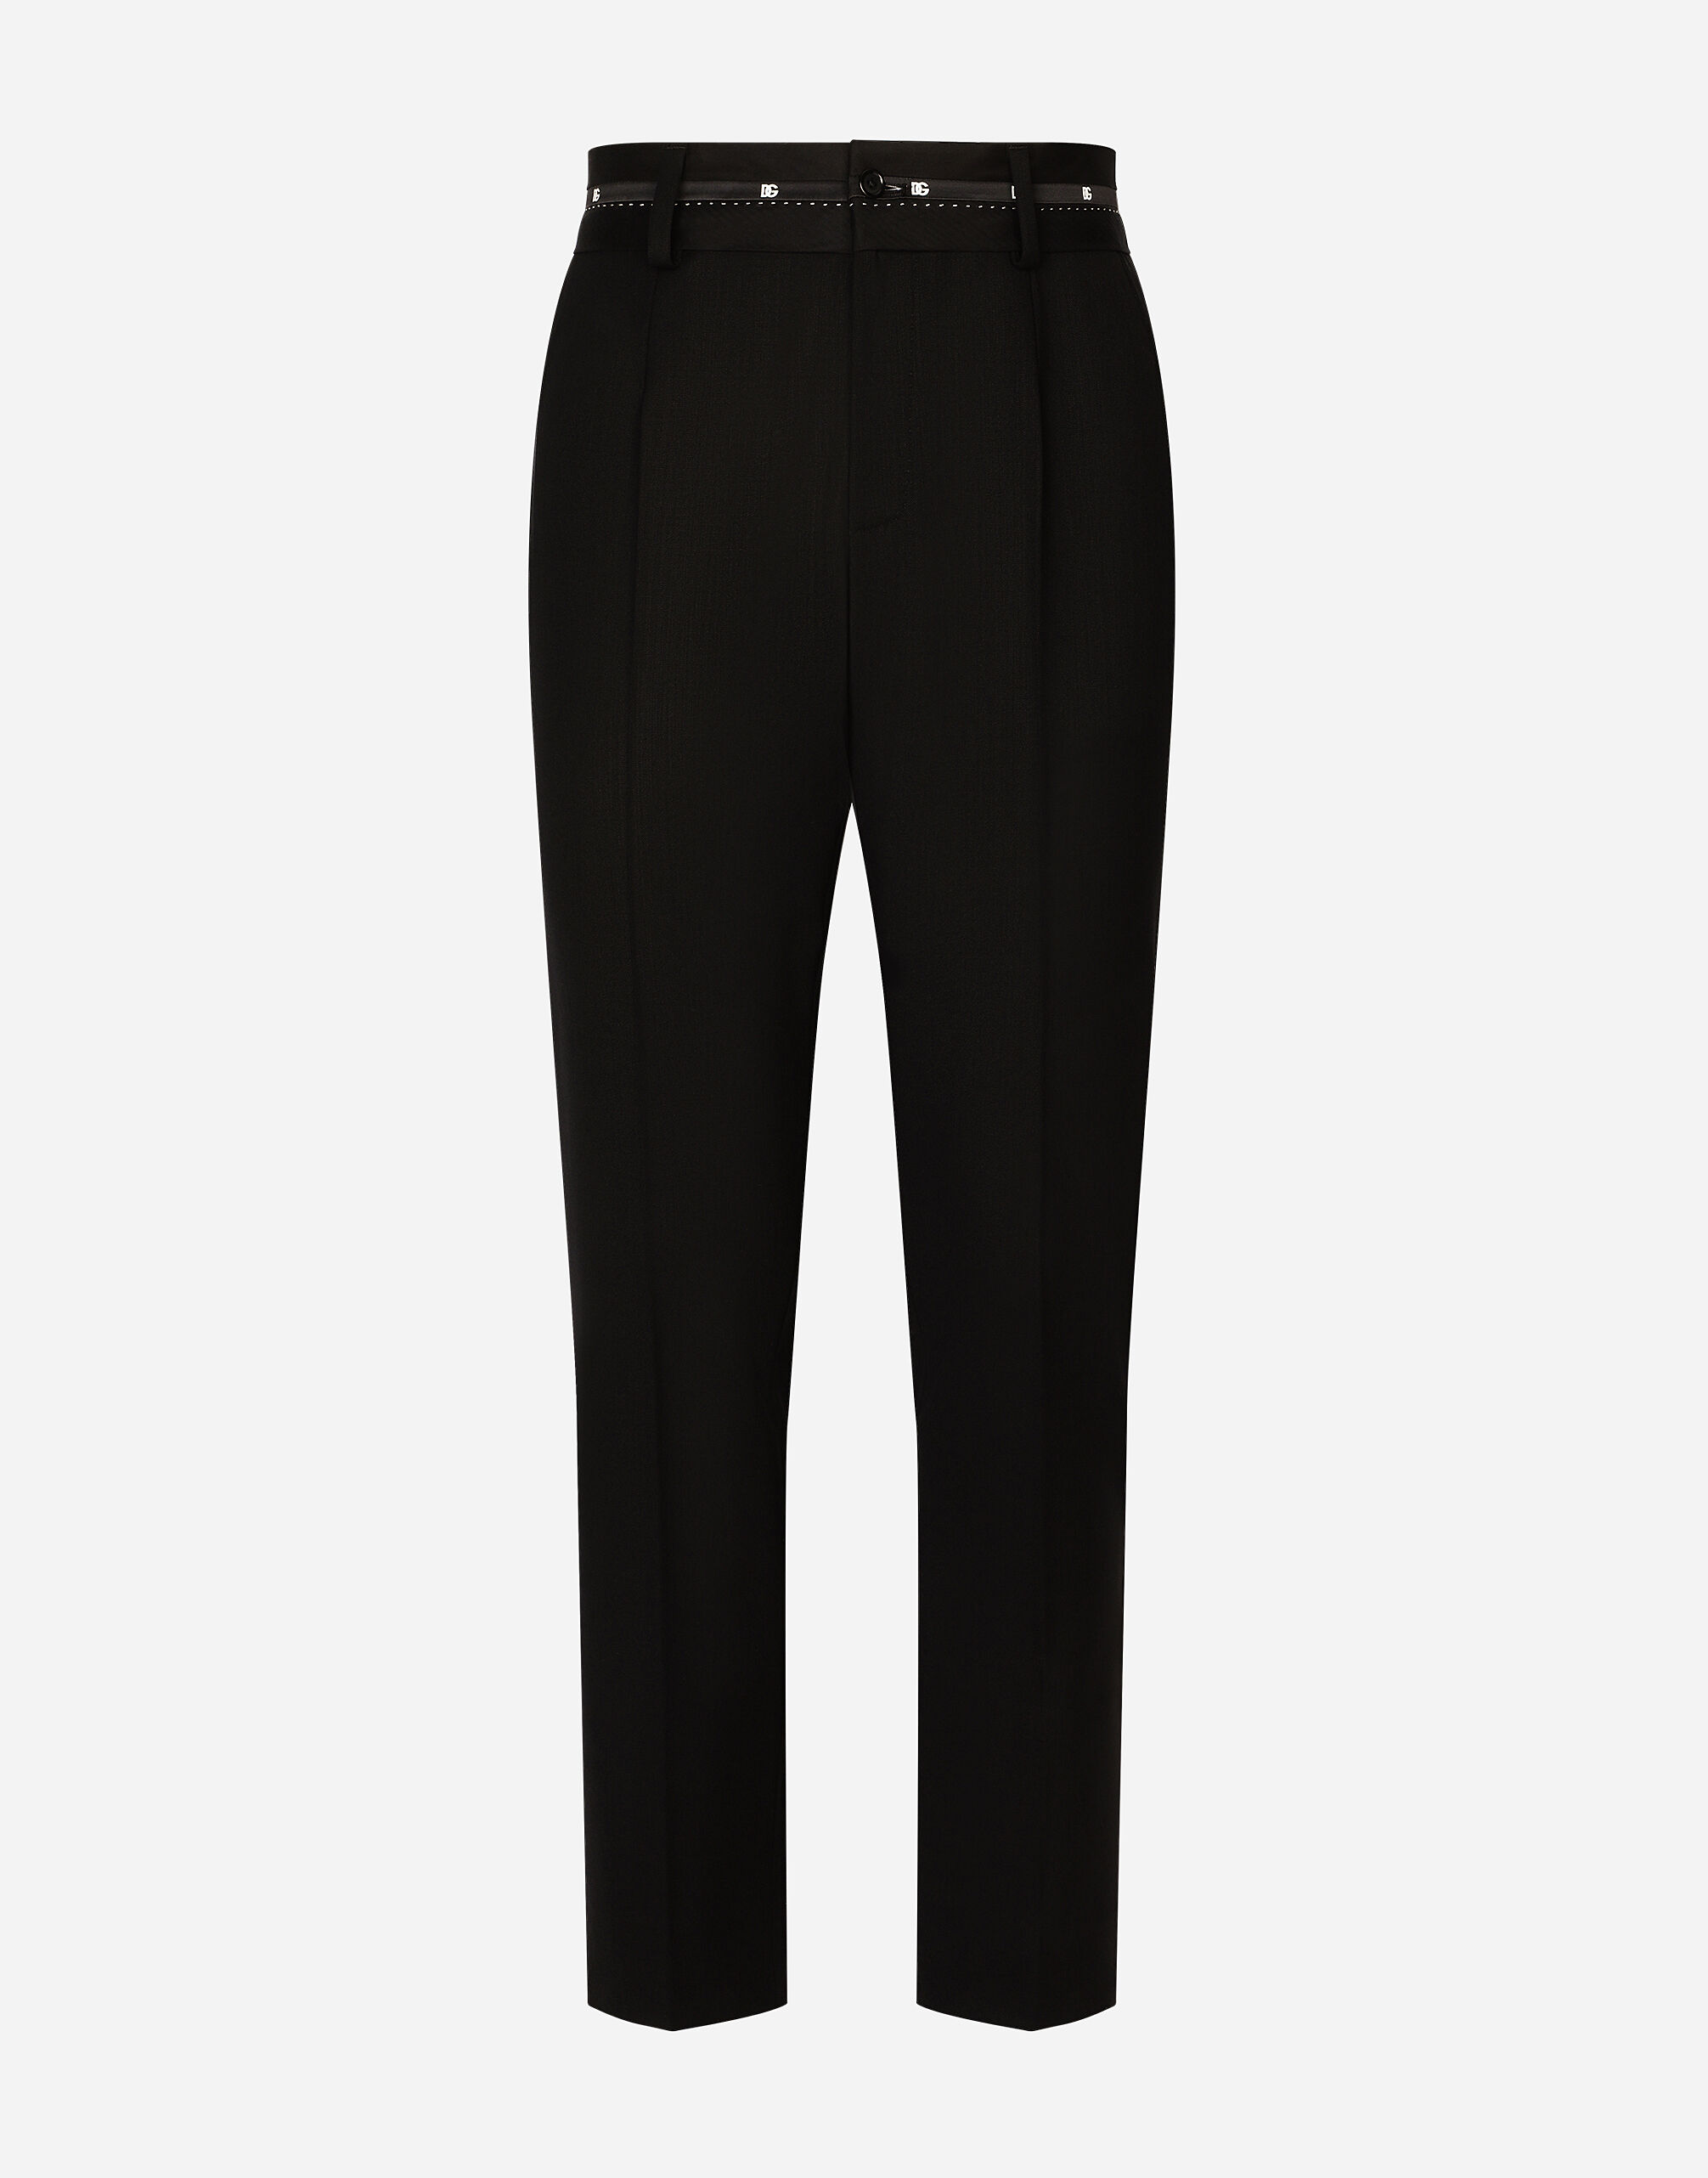 Dolce&Gabbana Stretch wool pants with branded waistband Black F79BRTHLM9K